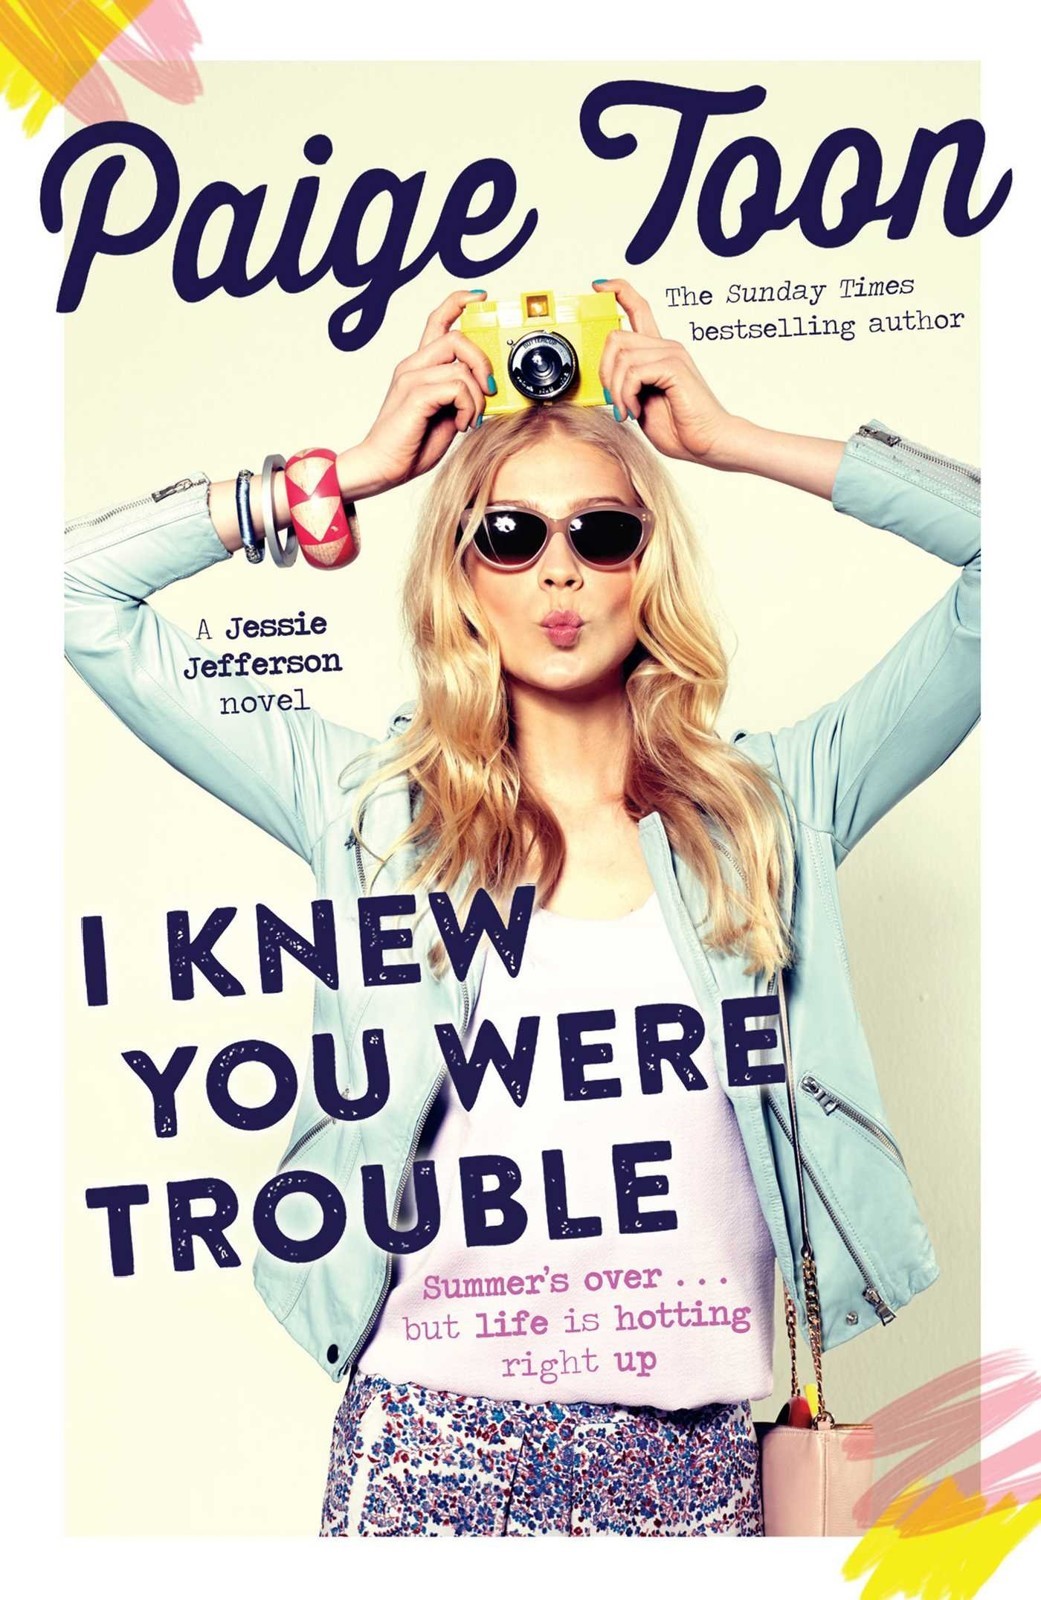 I Knew You Were Trouble: A Jessie Jefferson Novel by Paige Toon